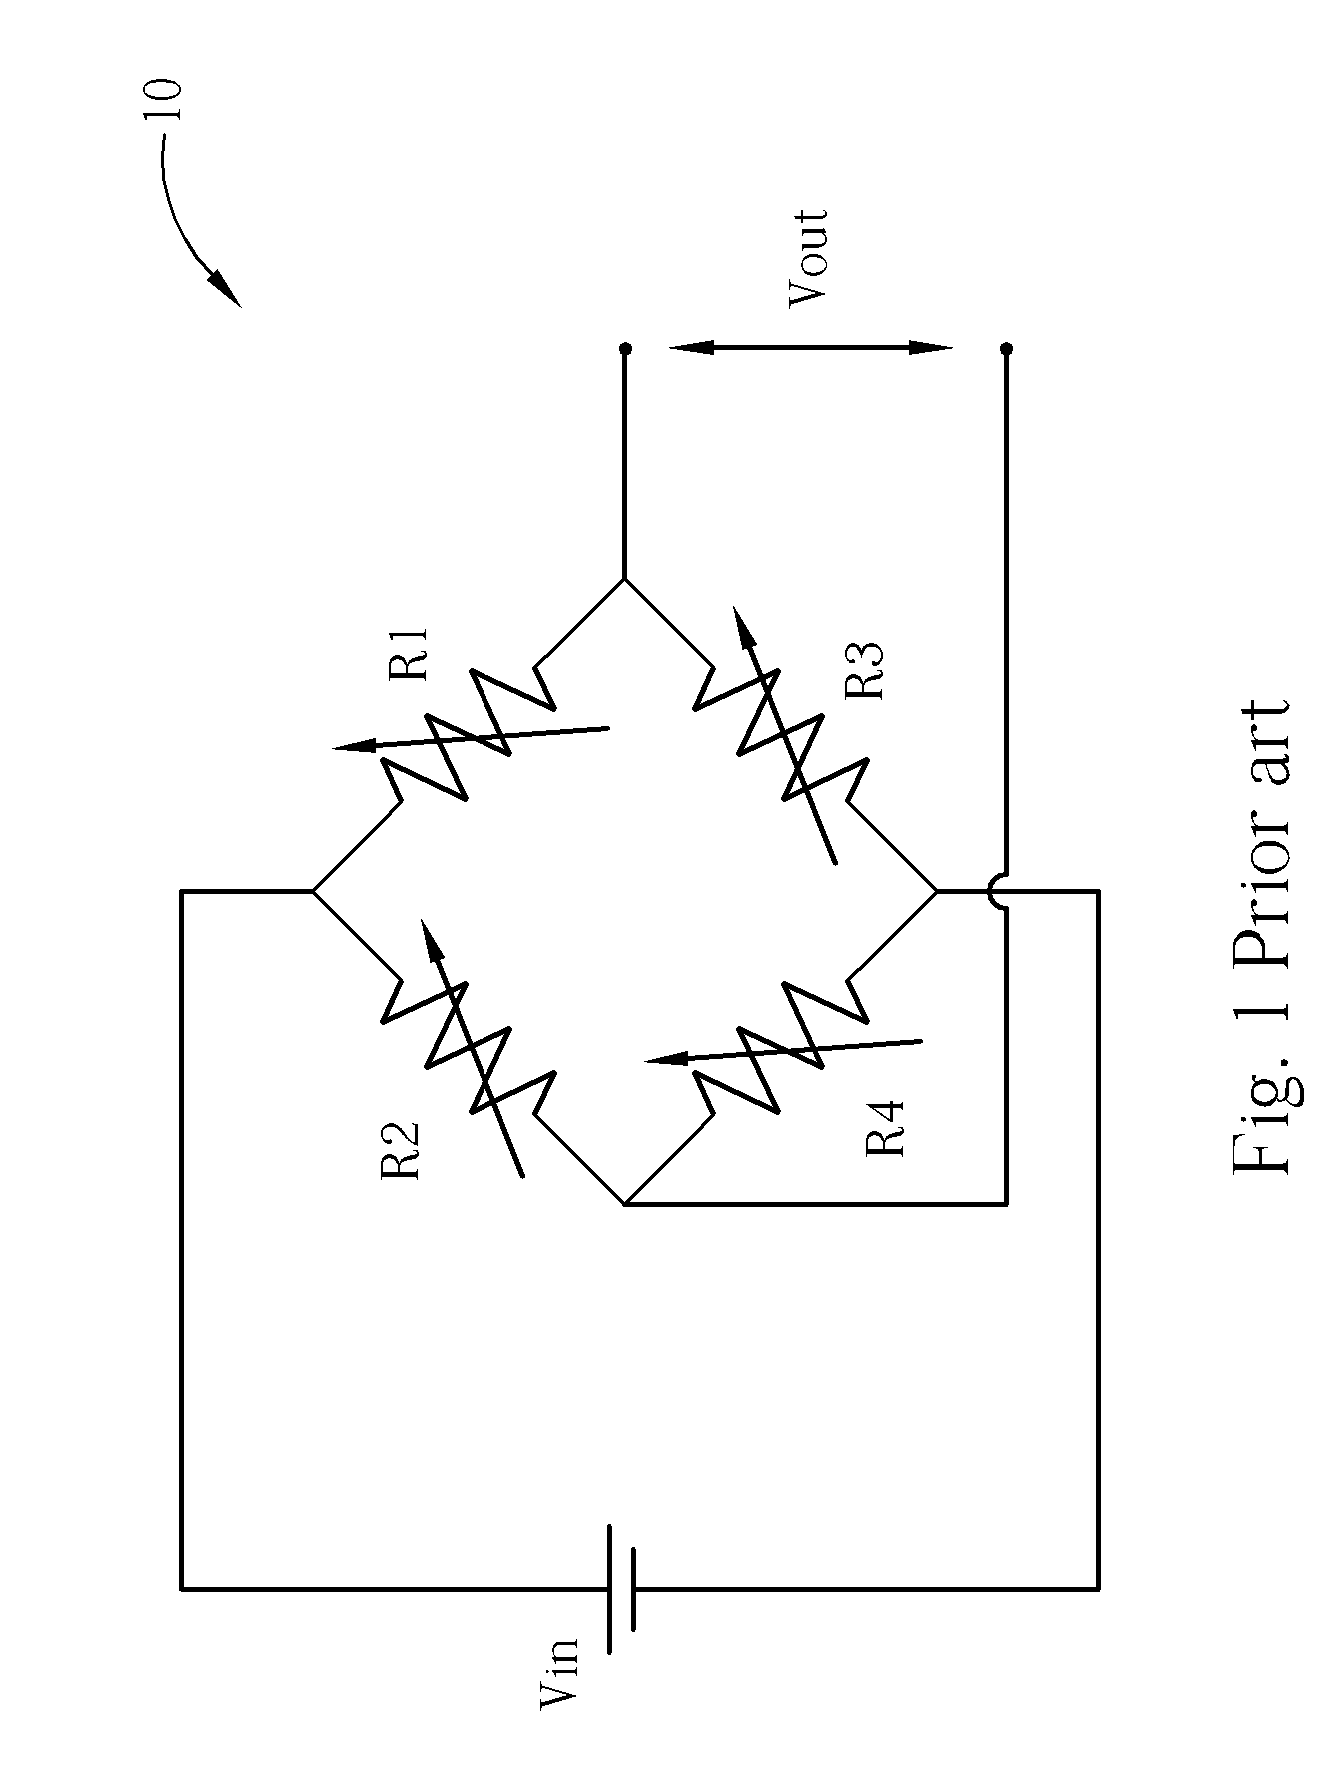 Method of calibrating zero offset of a pressure sensor